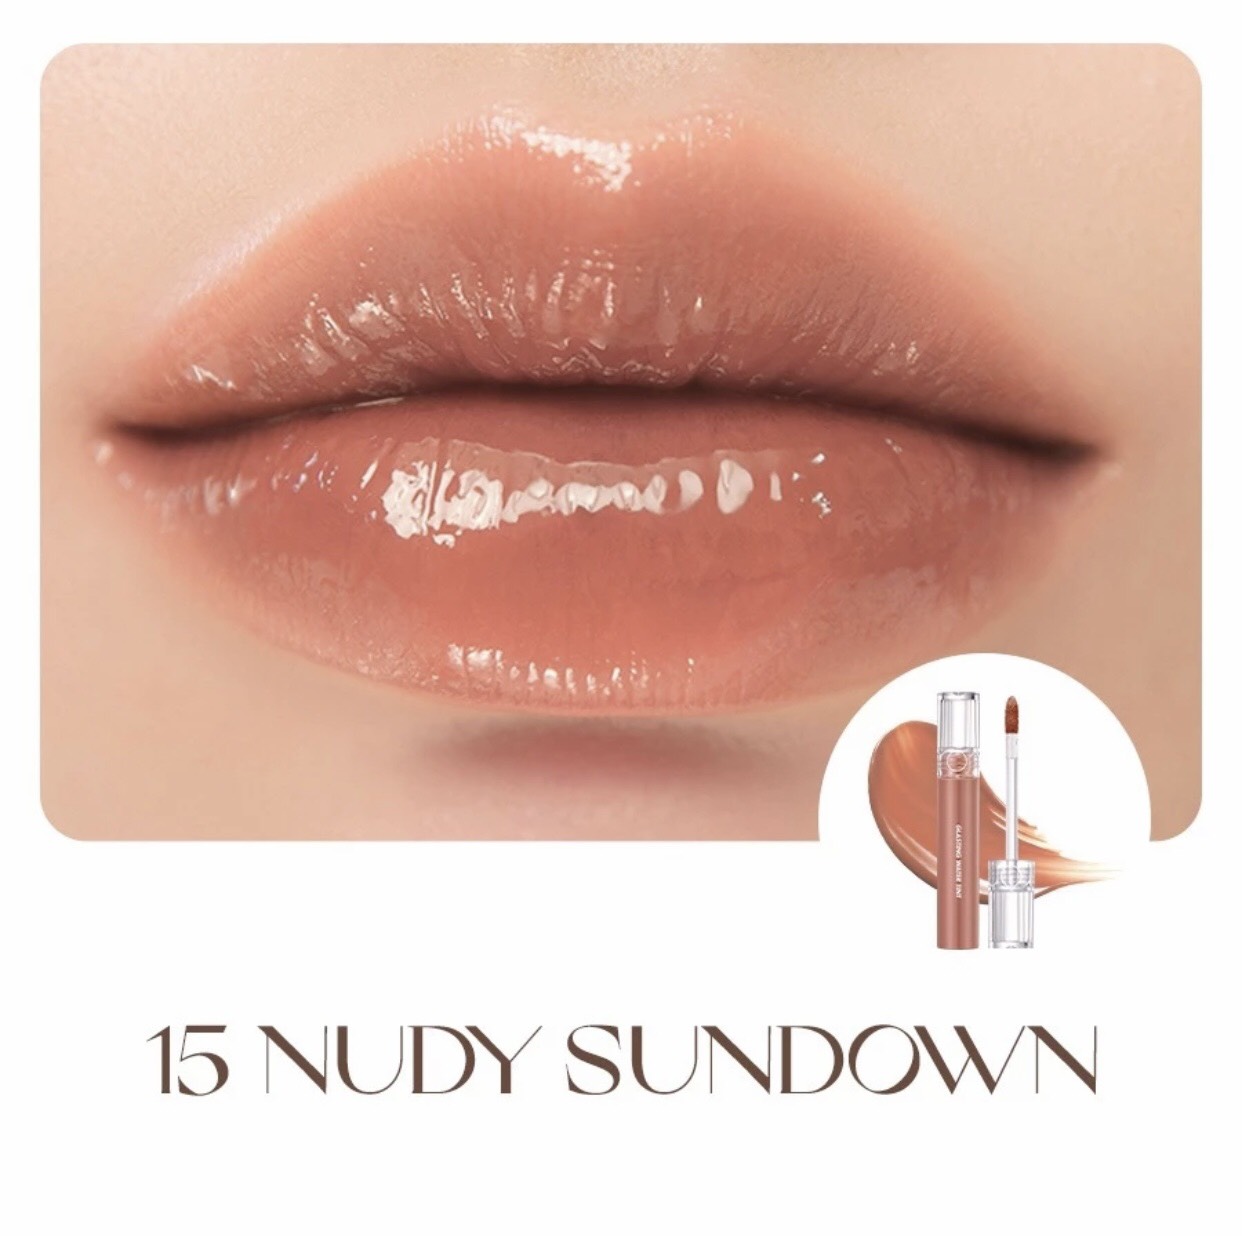 #15 Nudy Sundown - Cam nude (Nguồn: Internet)